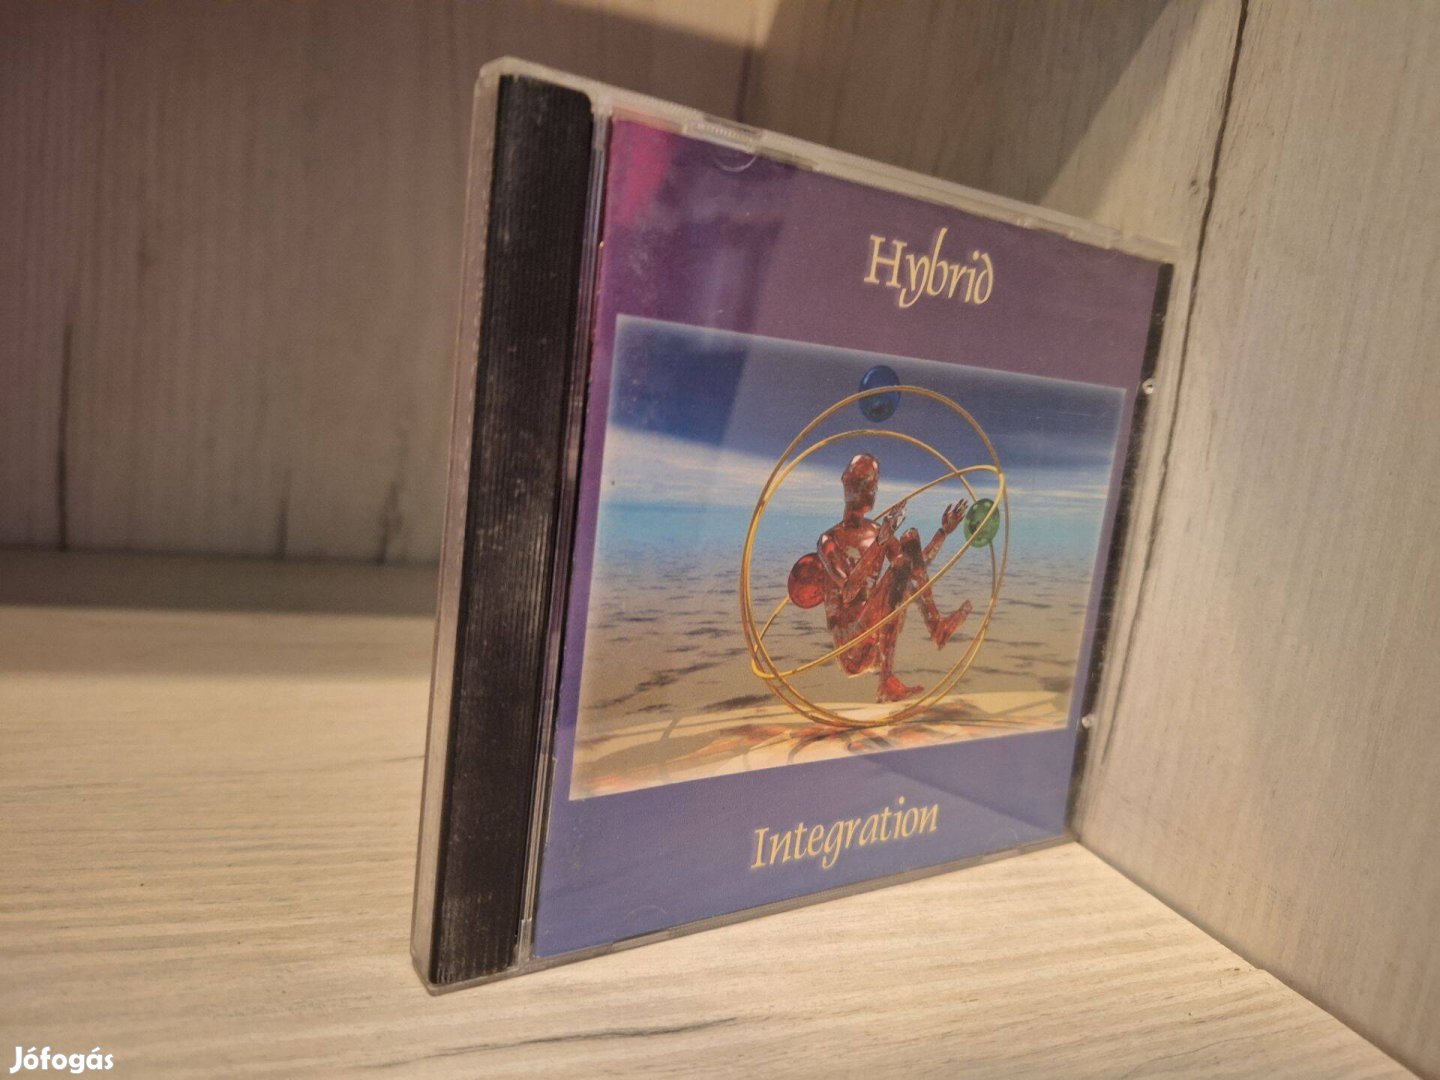 Hybrid - Integration CD